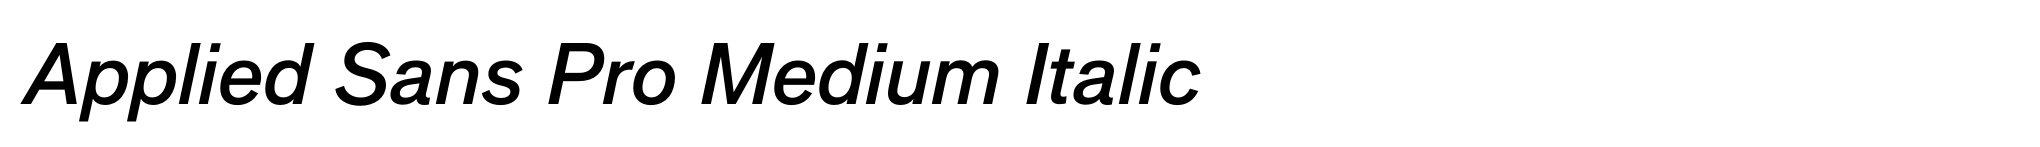 Applied Sans Pro Medium Italic image